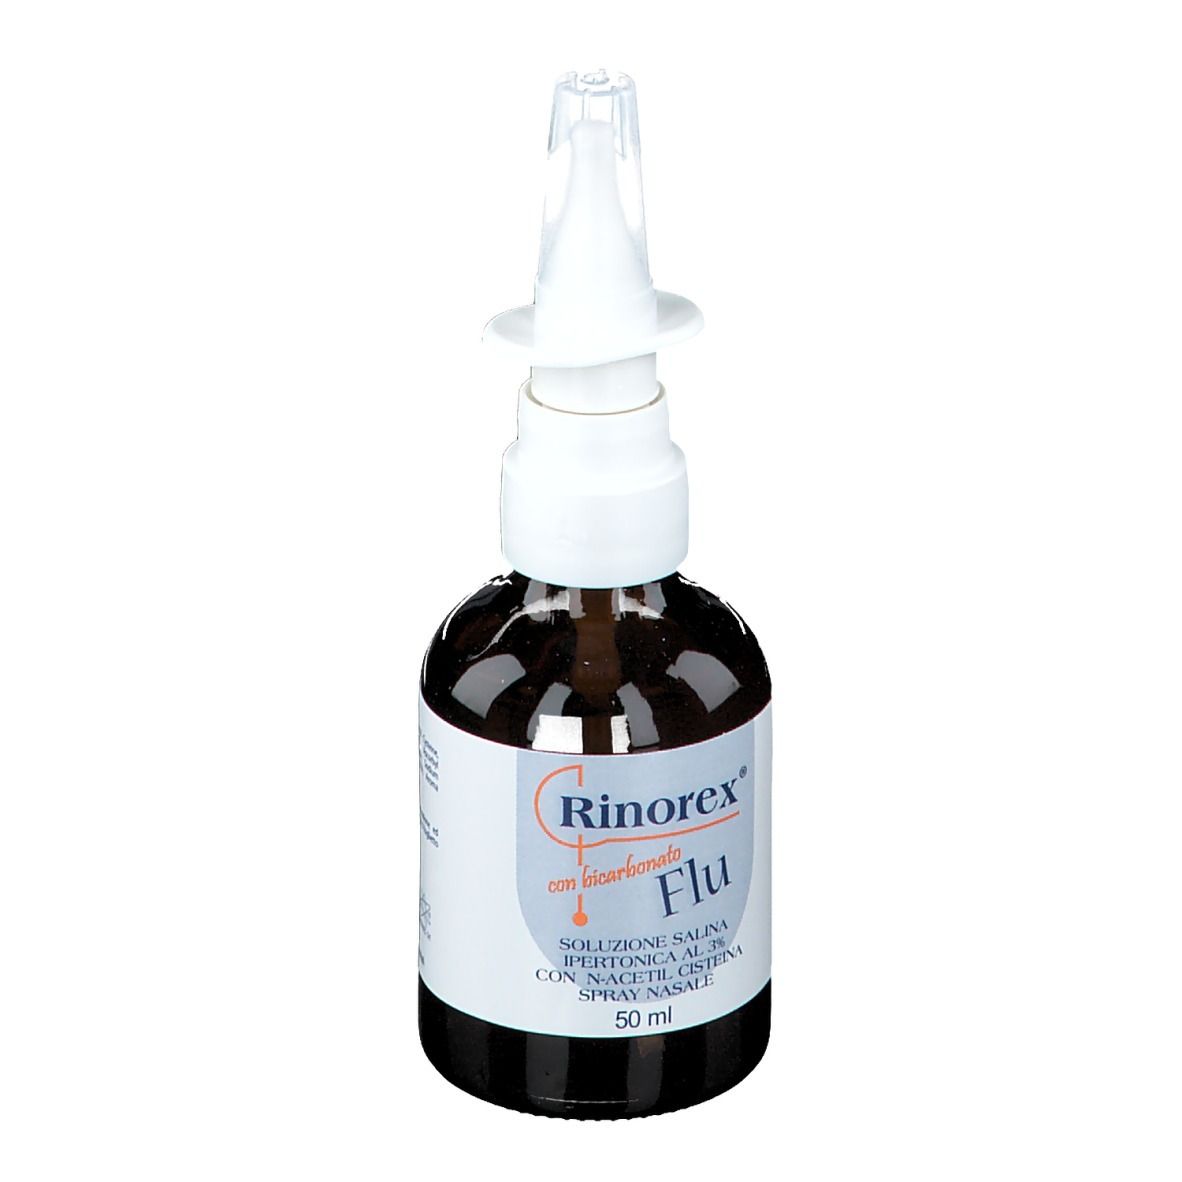 Rinorex® Flu Spray nasale